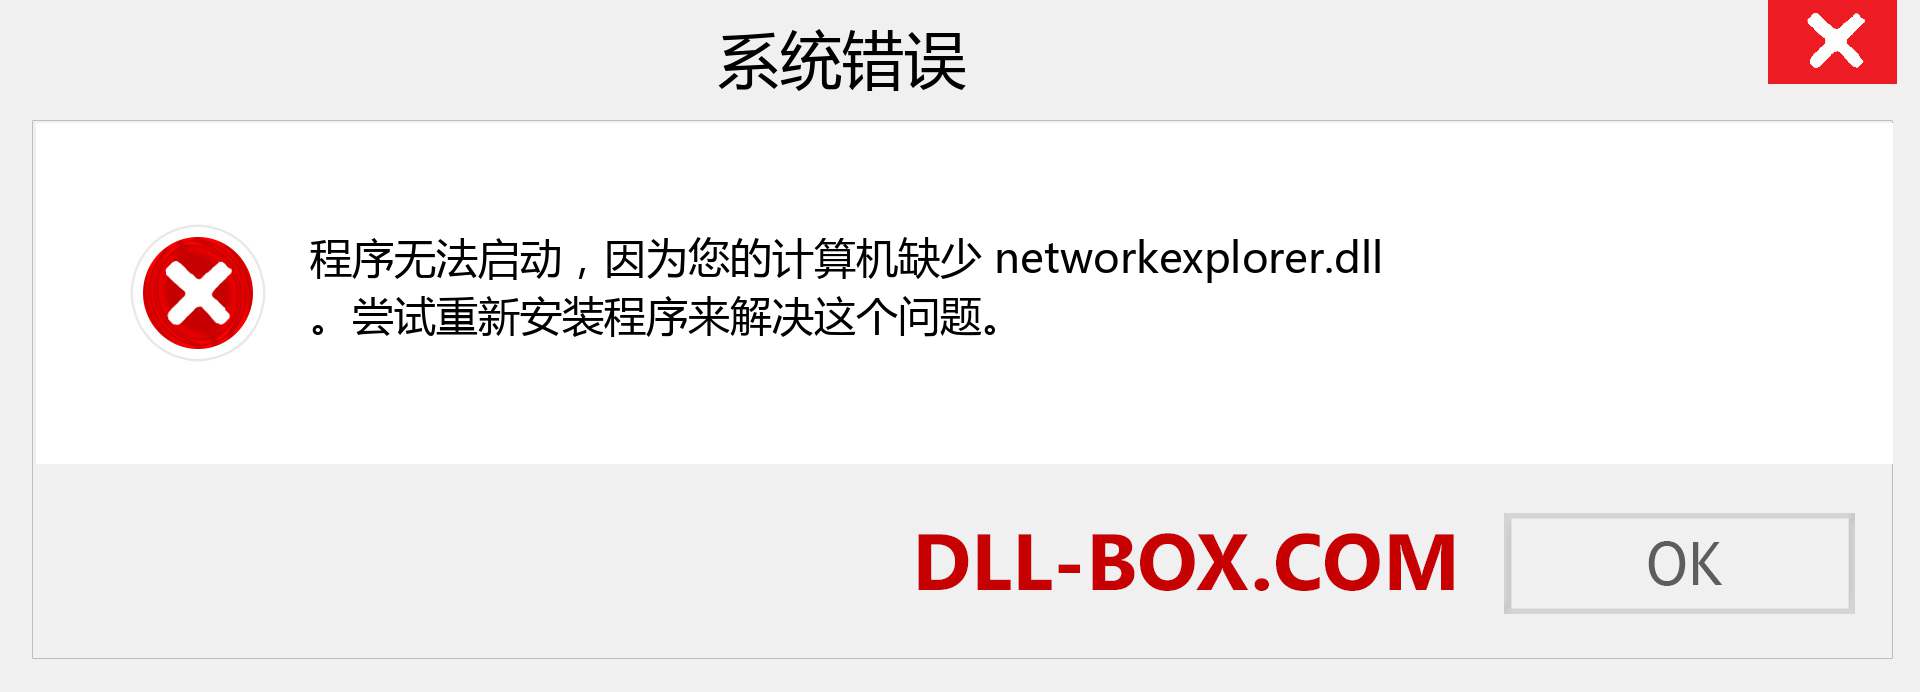 networkexplorer.dll 文件丢失？。 适用于 Windows 7、8、10 的下载 - 修复 Windows、照片、图像上的 networkexplorer dll 丢失错误